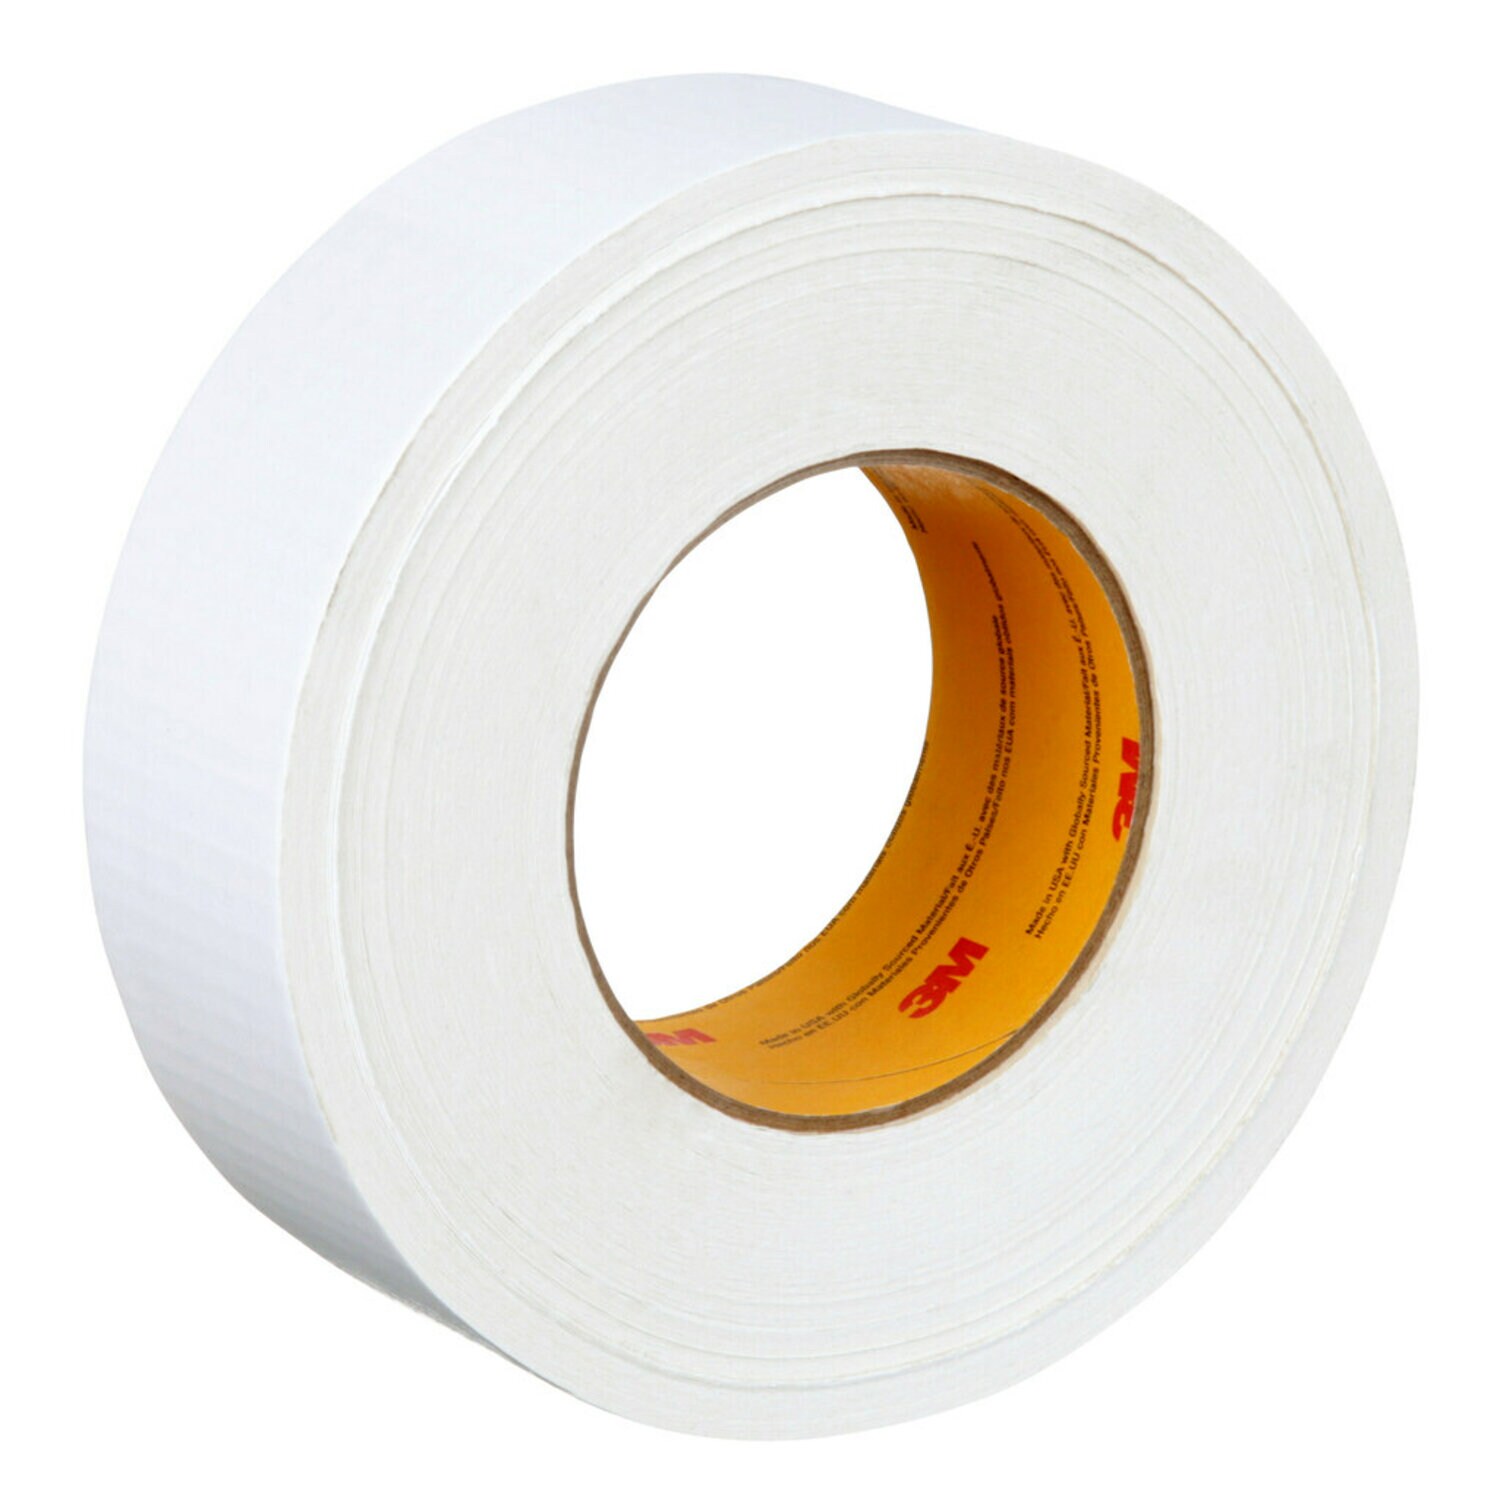 7100043871 - 3M Venture Tape Cloth Duct Tape 1500, White, 48 mm x 55 m (1.88 in x
60.1 yd), 24/Case